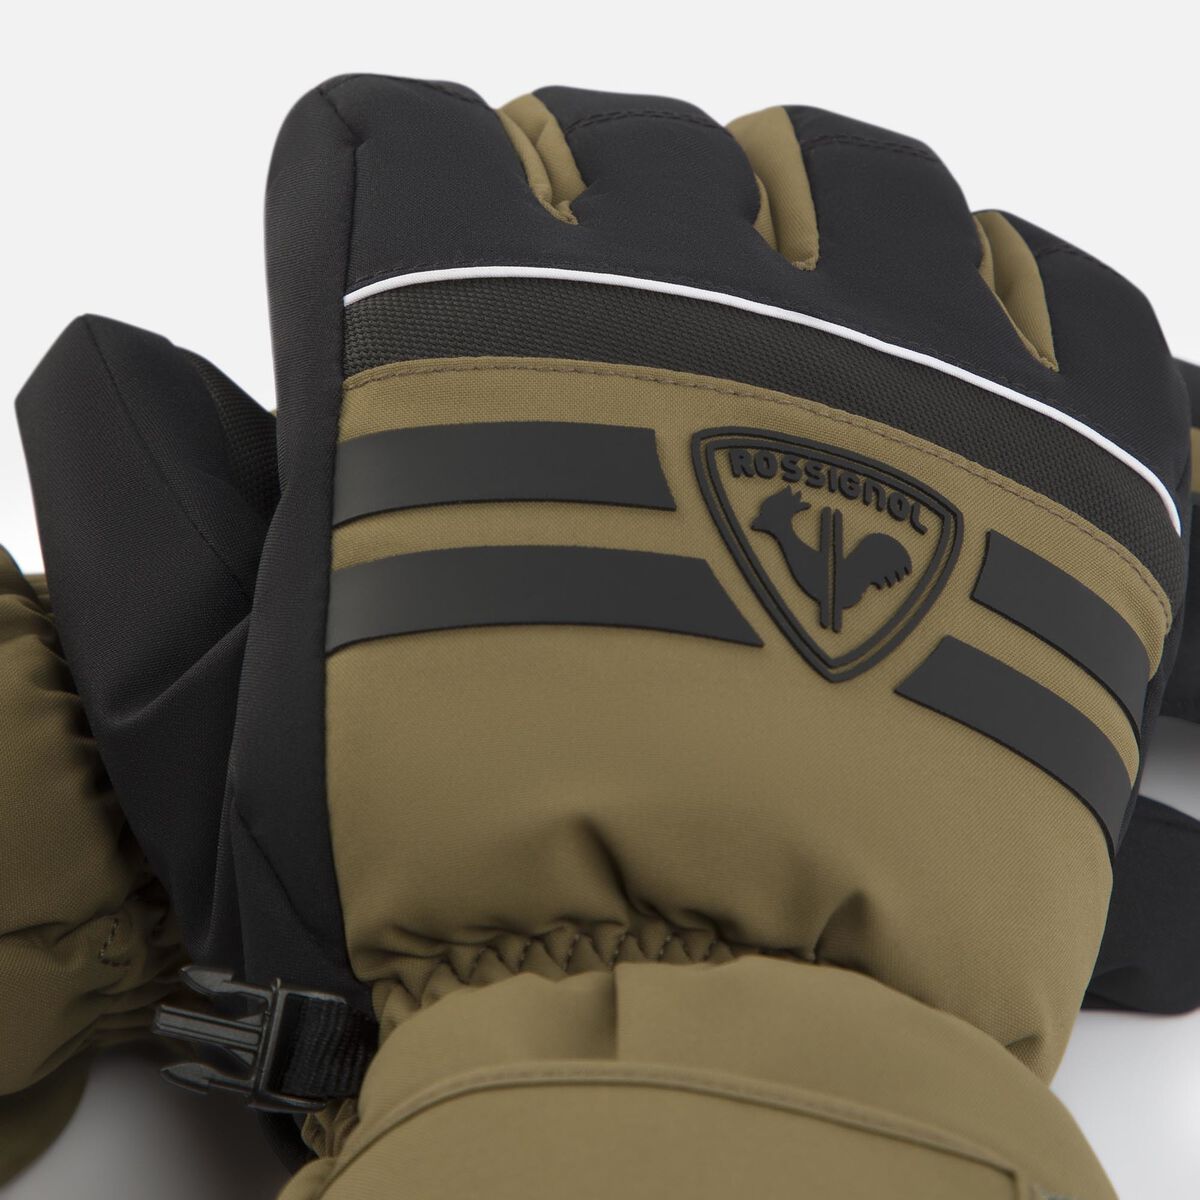 Rossignol Men's Tech IMP'R Ski Gloves Green